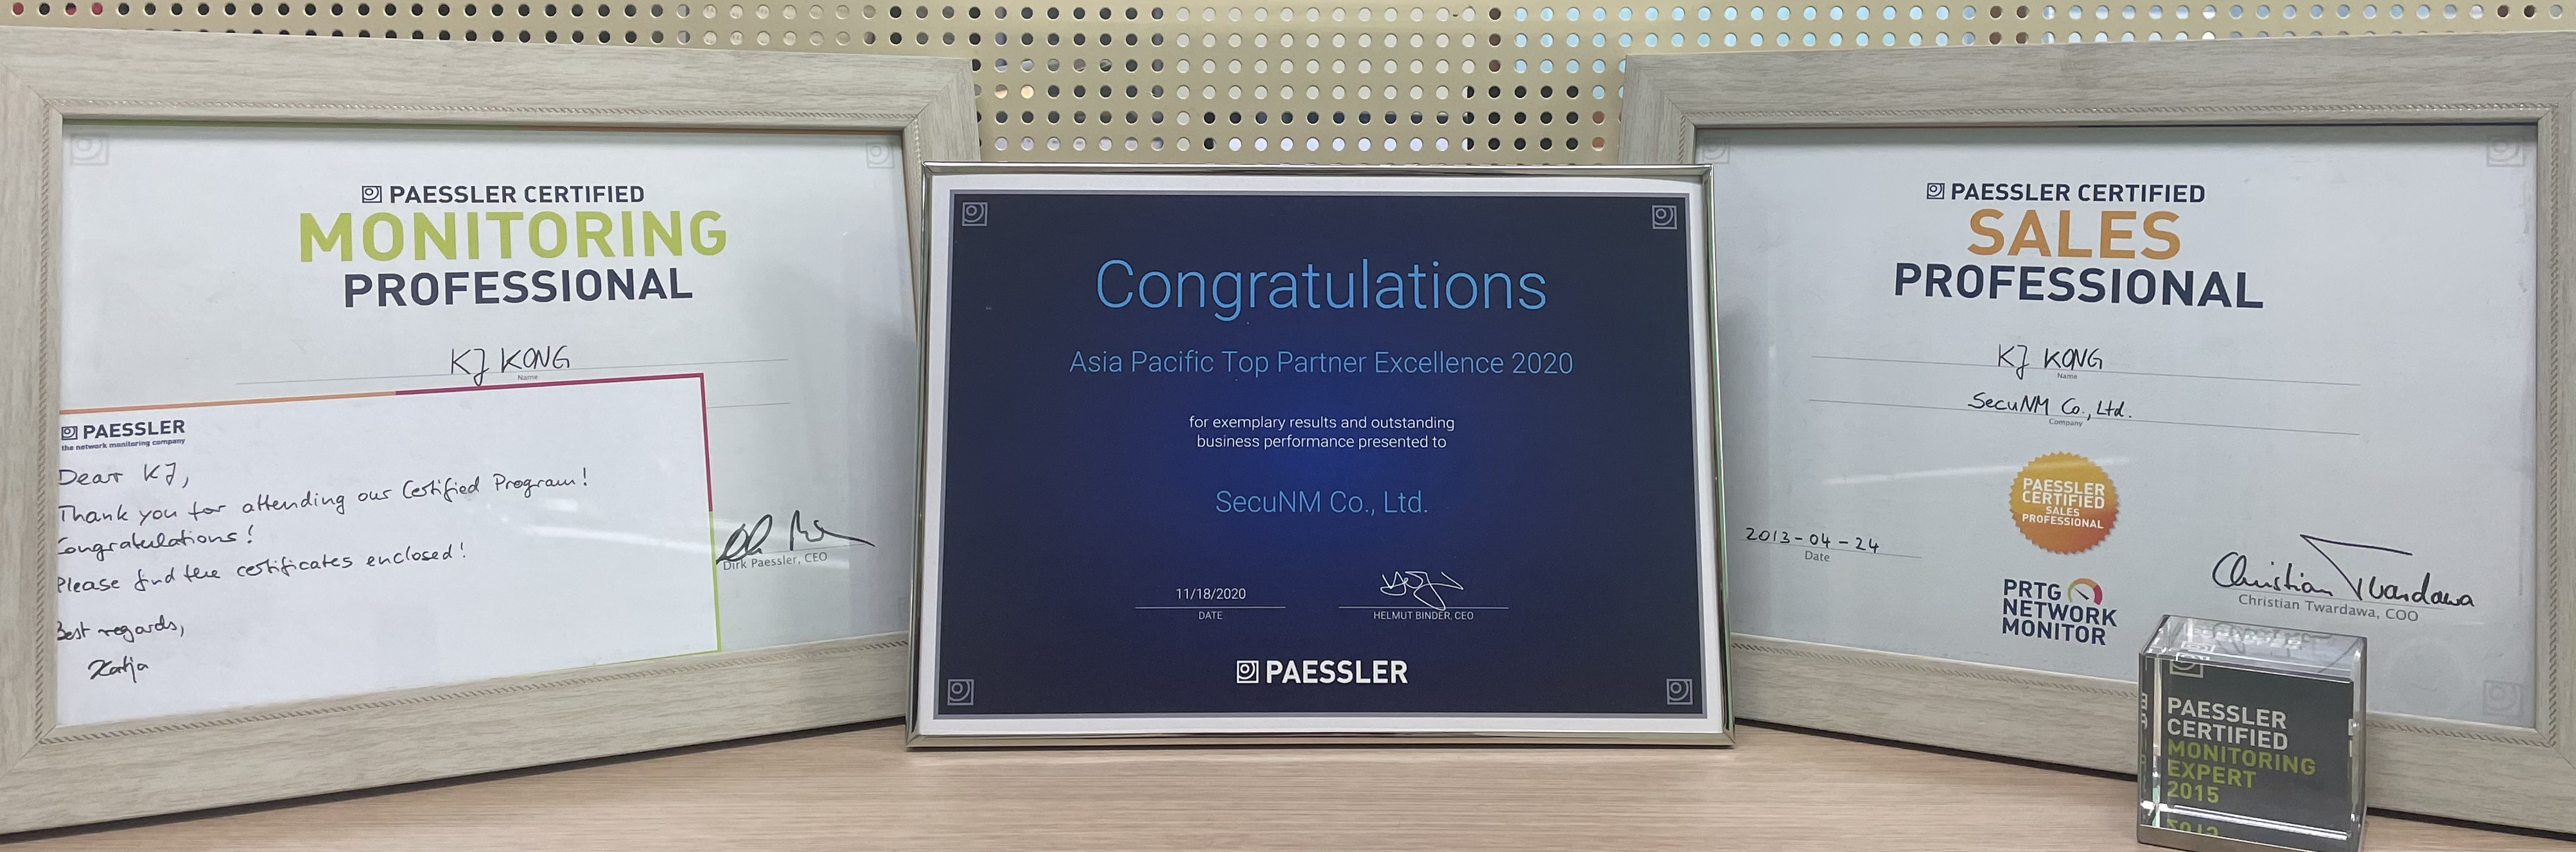 APAC_Top Partner Certified.png